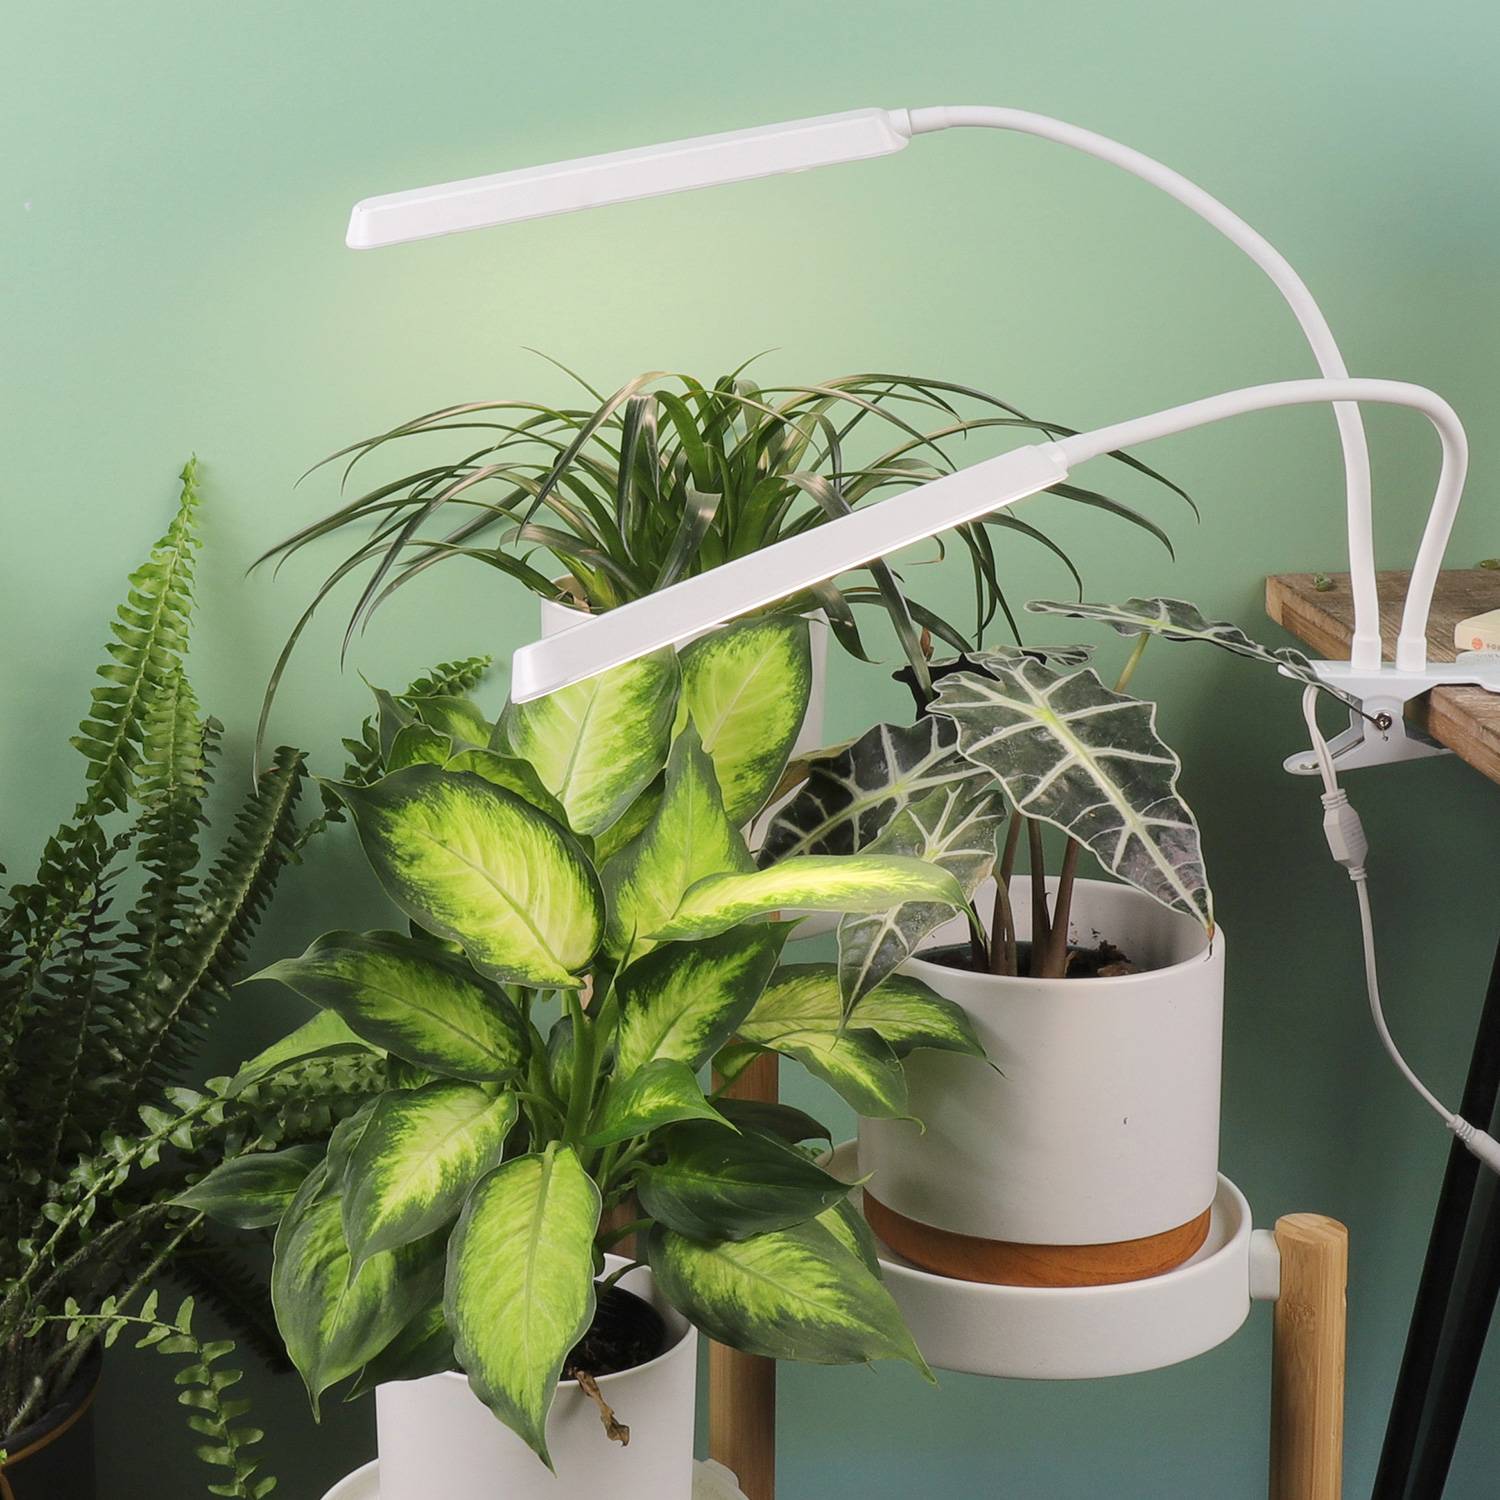 TG201 LED փակ պարտեզի բույսերի լույսեր ձմռան համար Լավագույն աճող լույսեր բույսերի աճեցման հավաքածու